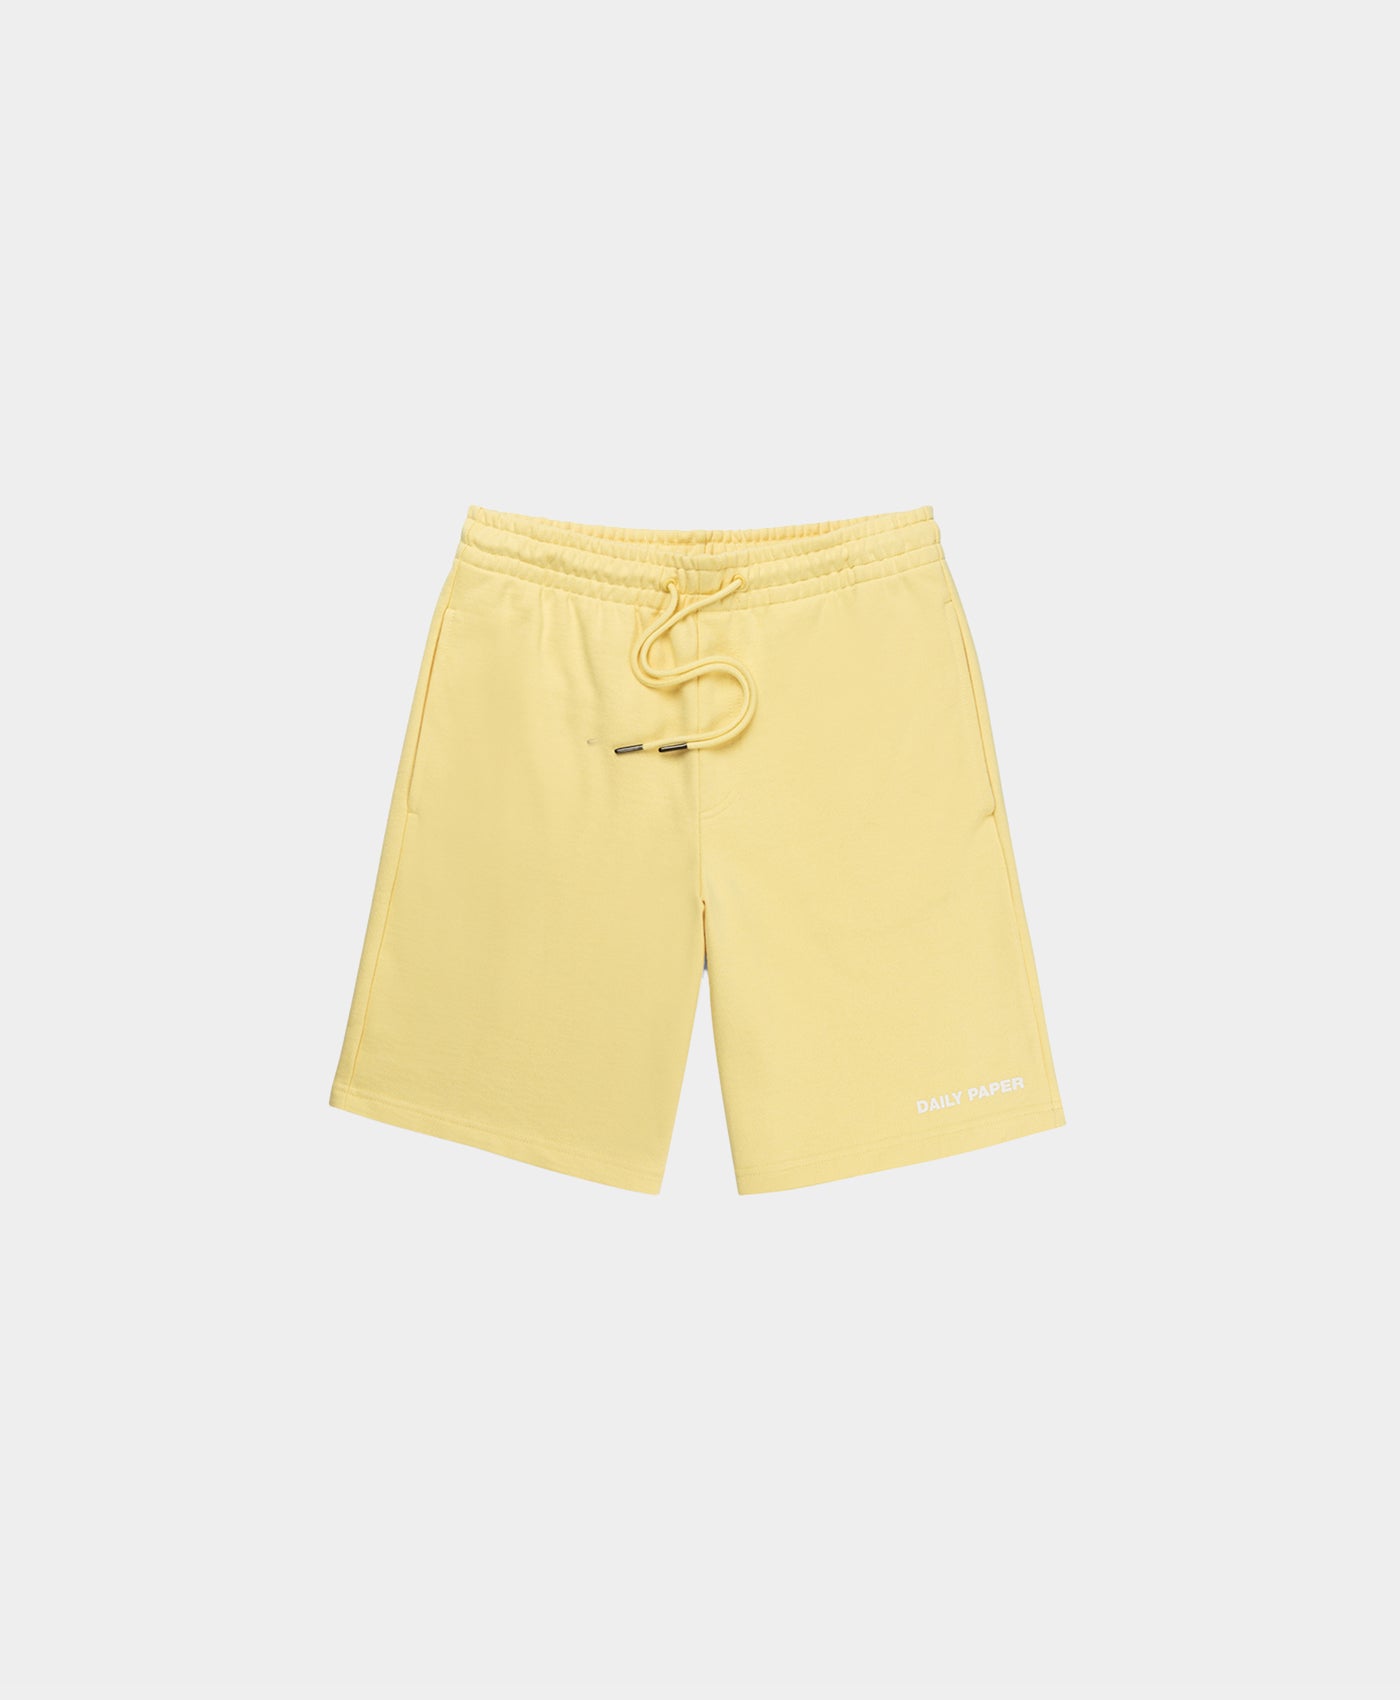 DP - Pineapple Yellow Refarid Shorts - Packshot - Front